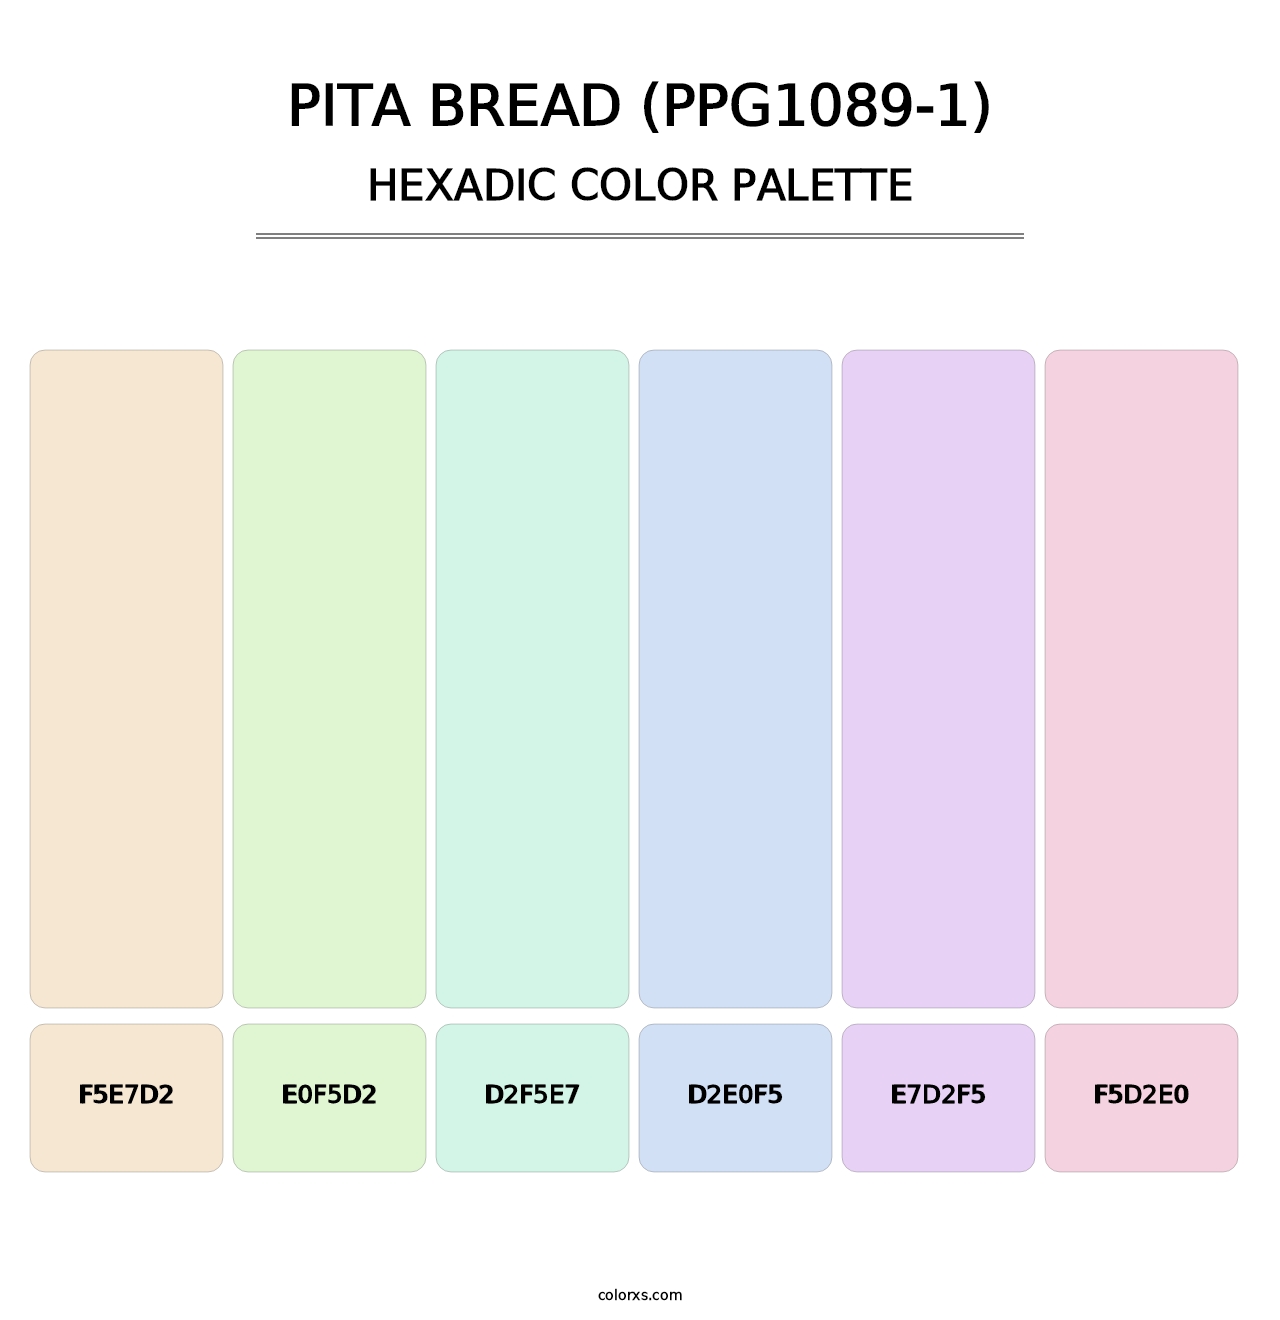 Pita Bread (PPG1089-1) - Hexadic Color Palette